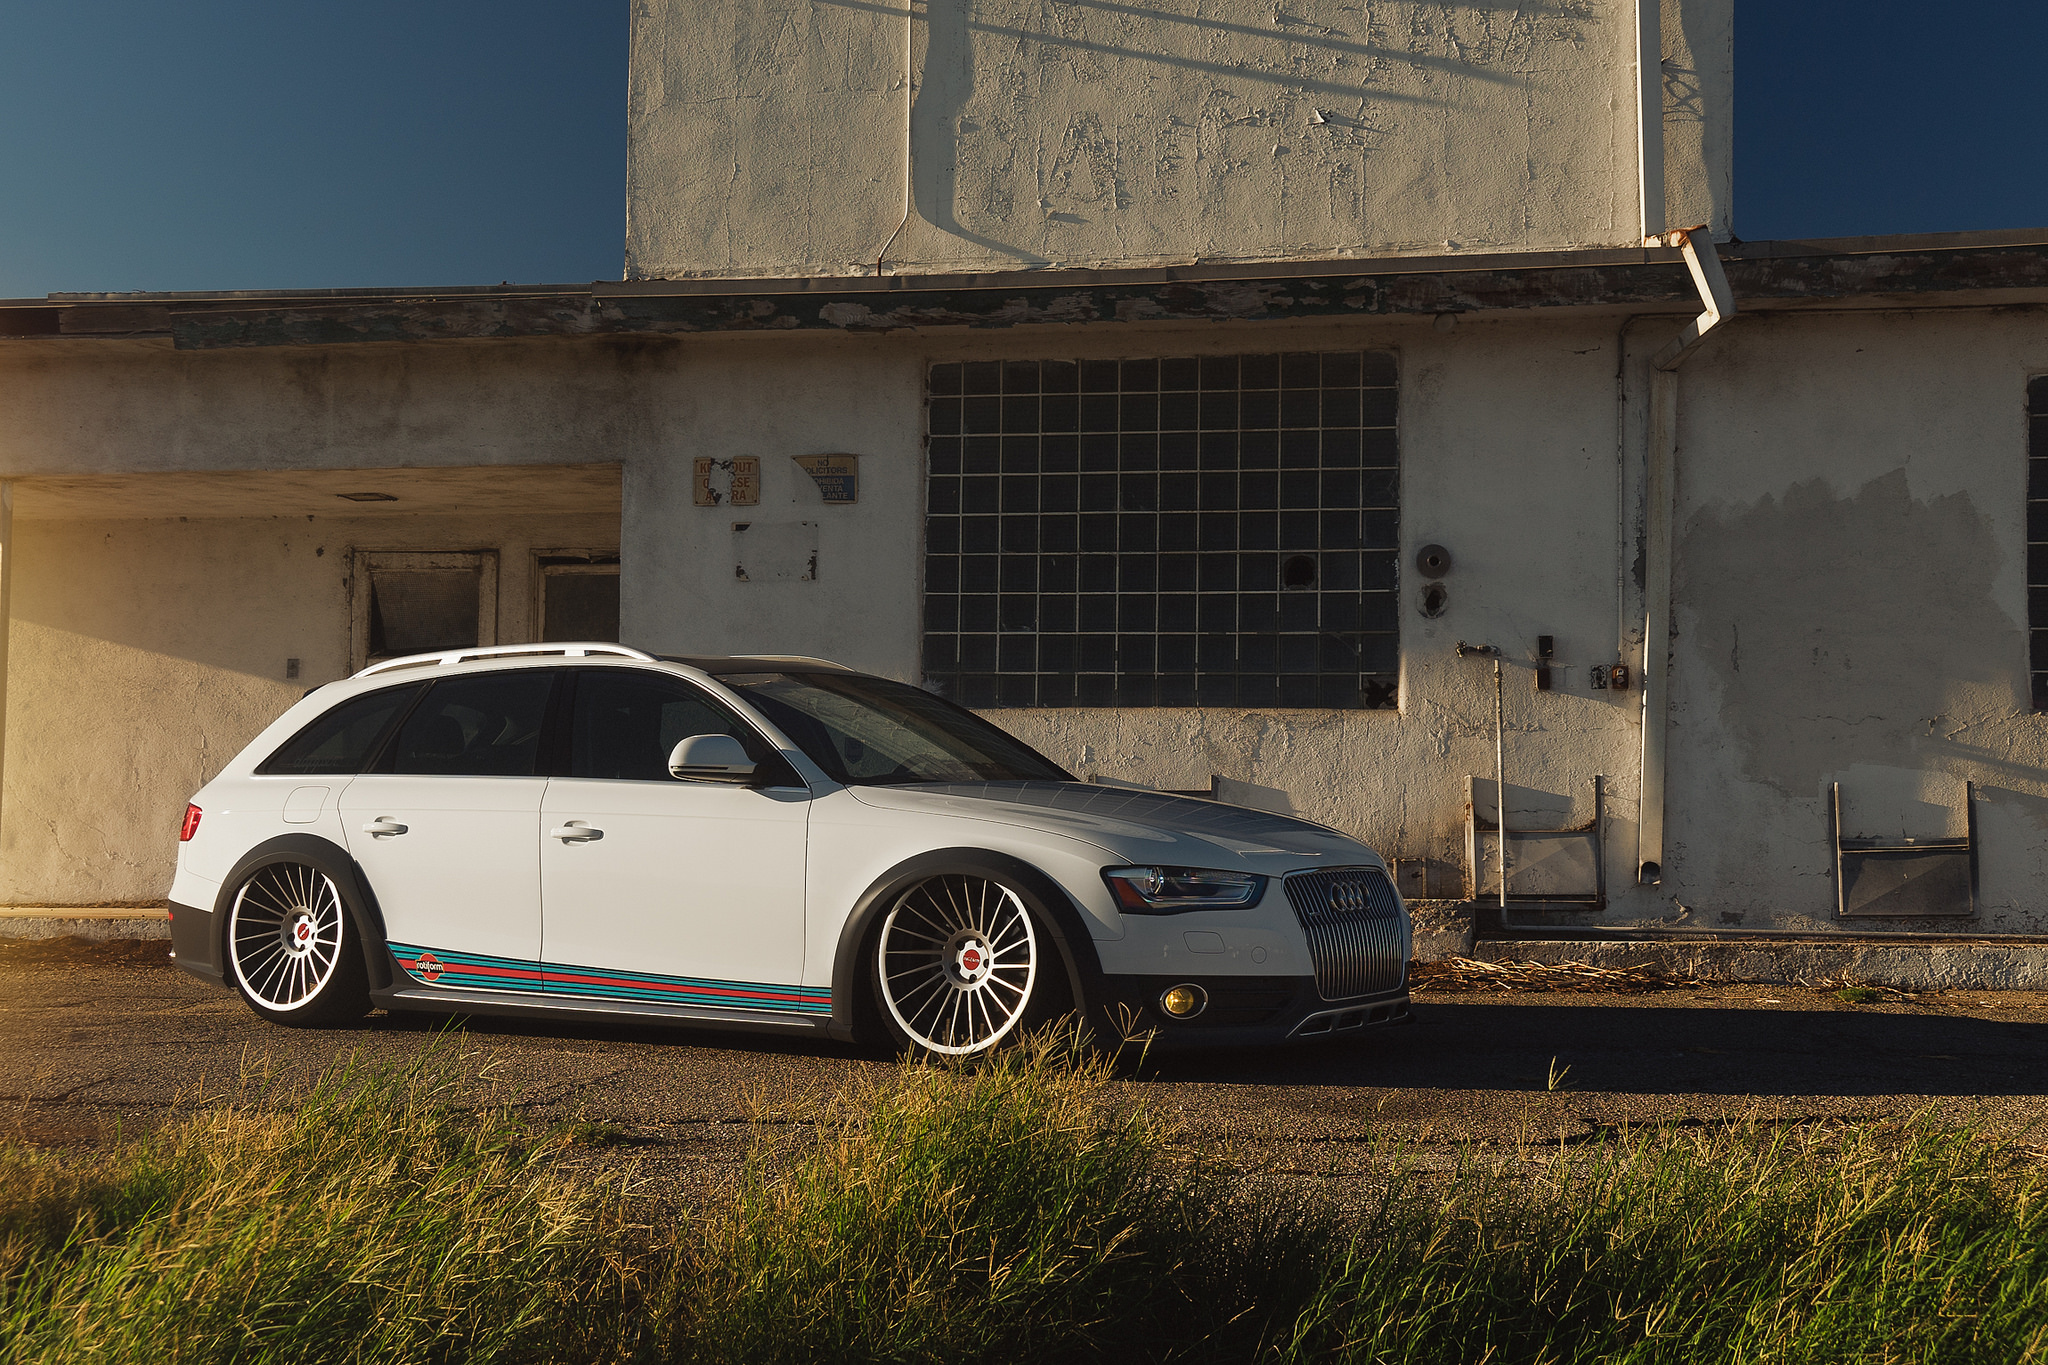 Descarga gratuita de fondo de pantalla para móvil de Audi, Audi A4, Vehículos.